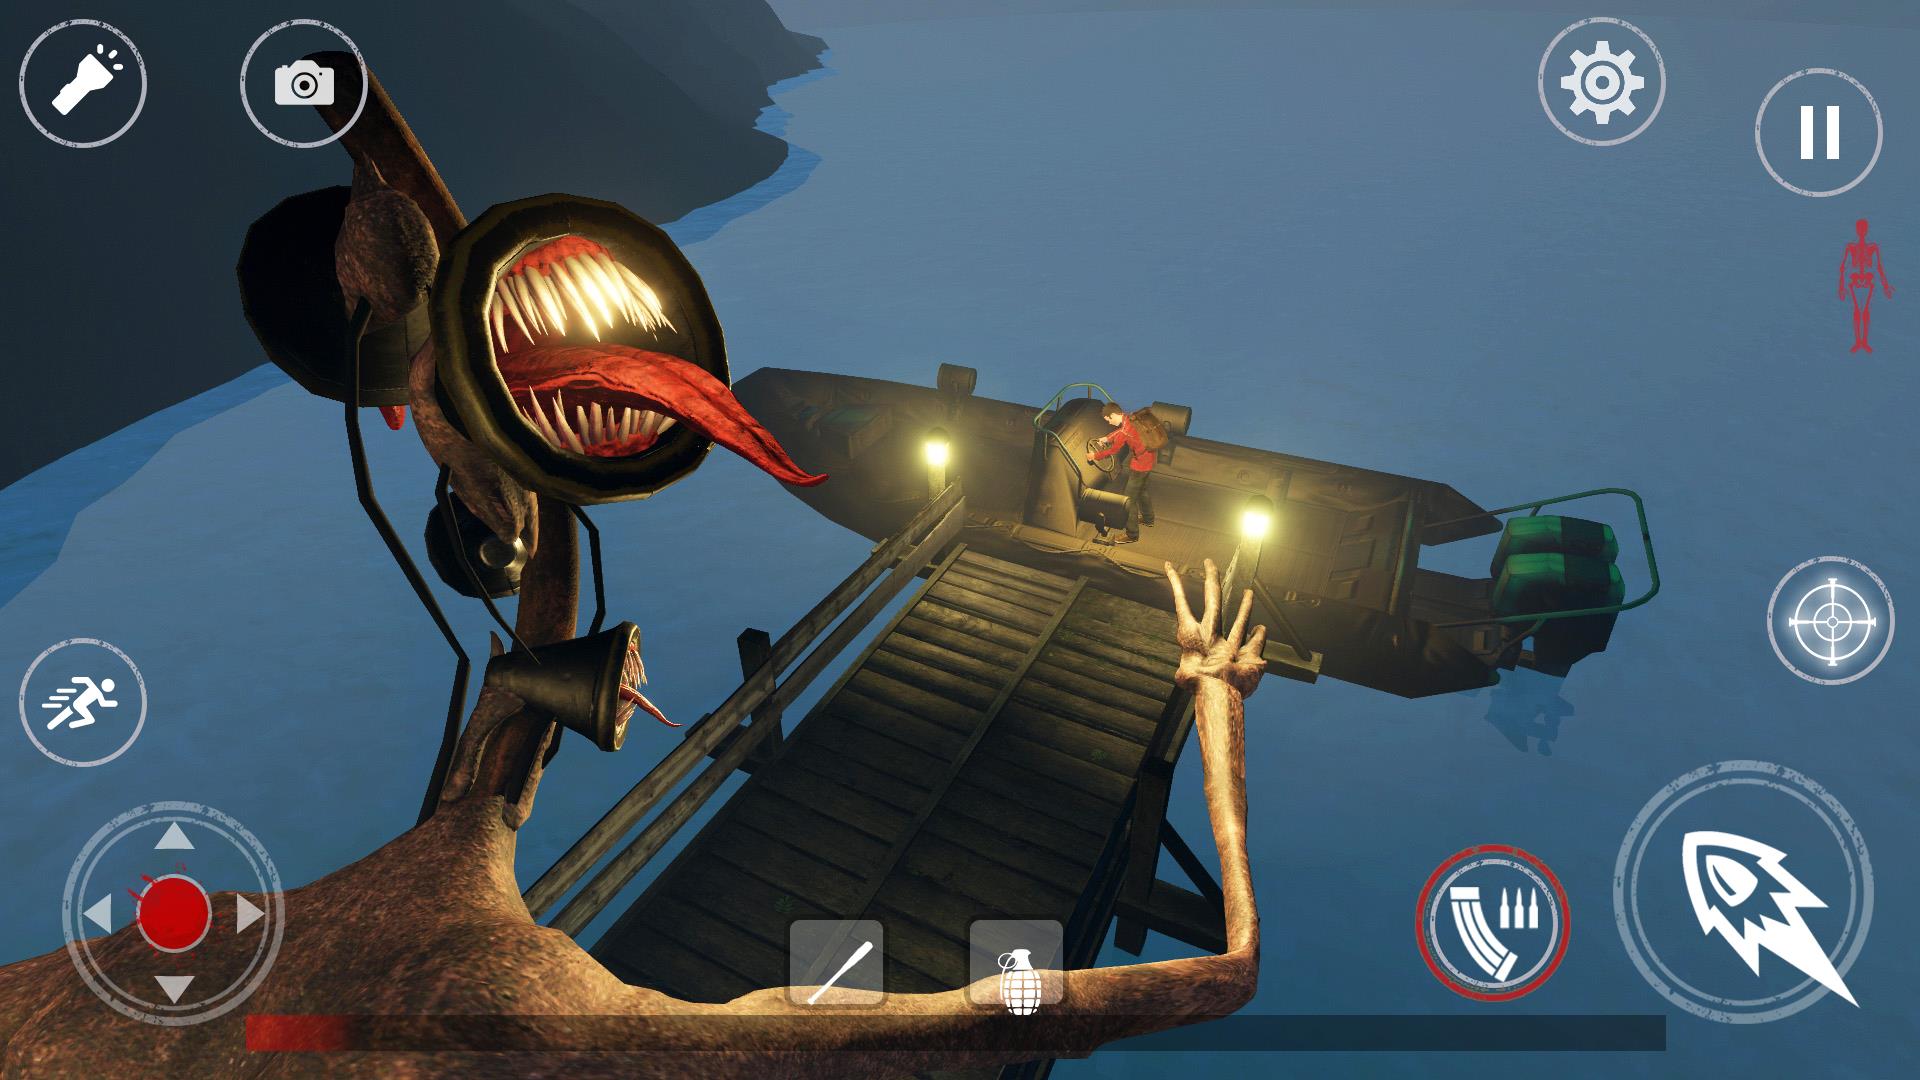 Siren Scary Head - Horror Game Screenshot 4